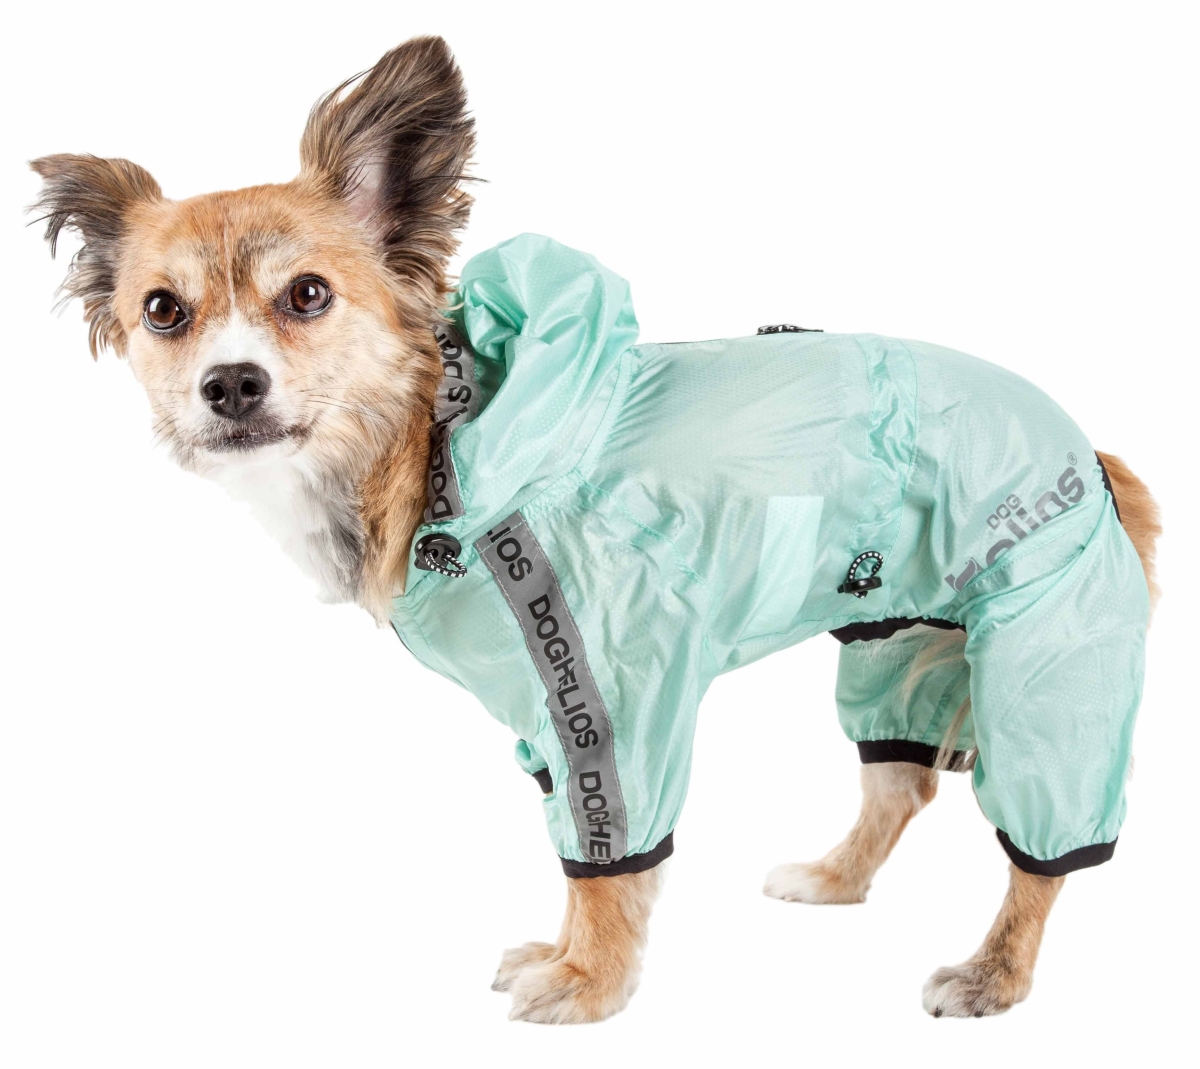 R8aqxl Torrential Shield Waterproof Multi-adjustable Full Bodied Pet Dog Windbreaker Raincoat - Aqua Blue, Extra Large